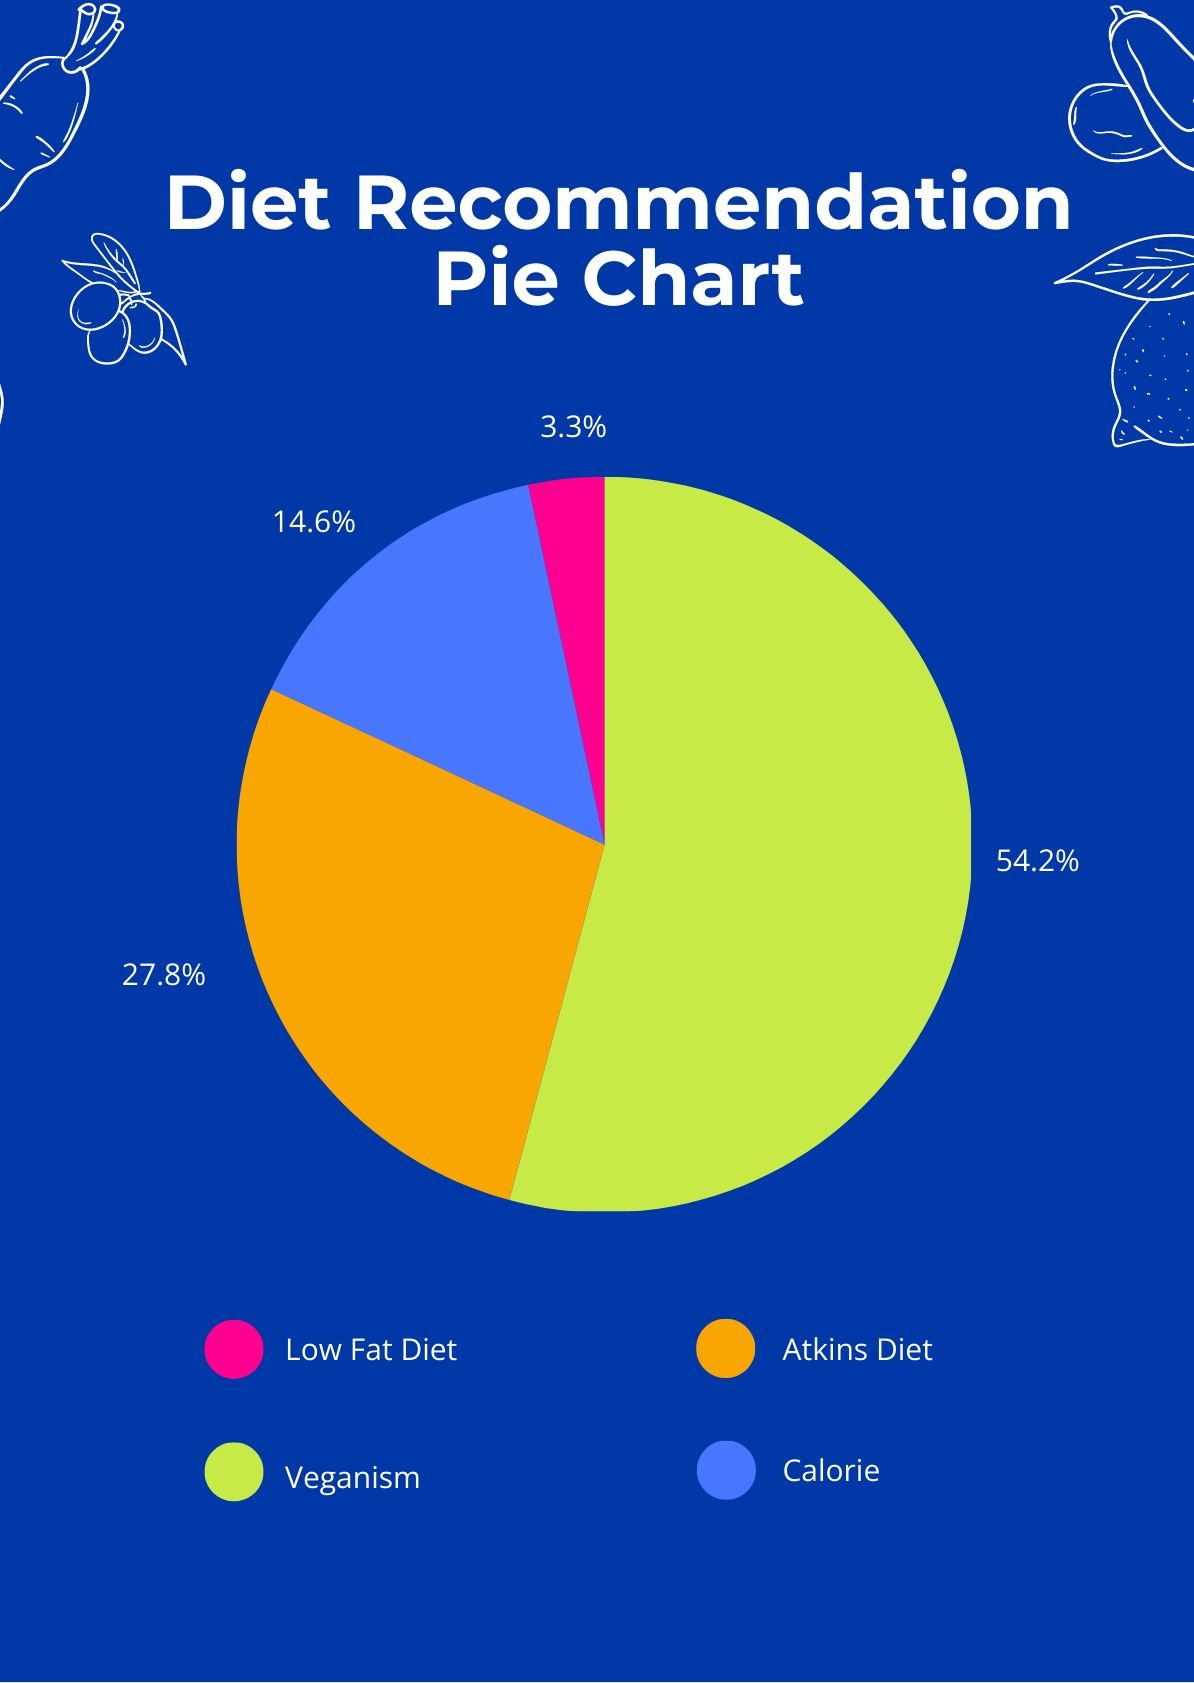 Diet Recommendation Pie Chart